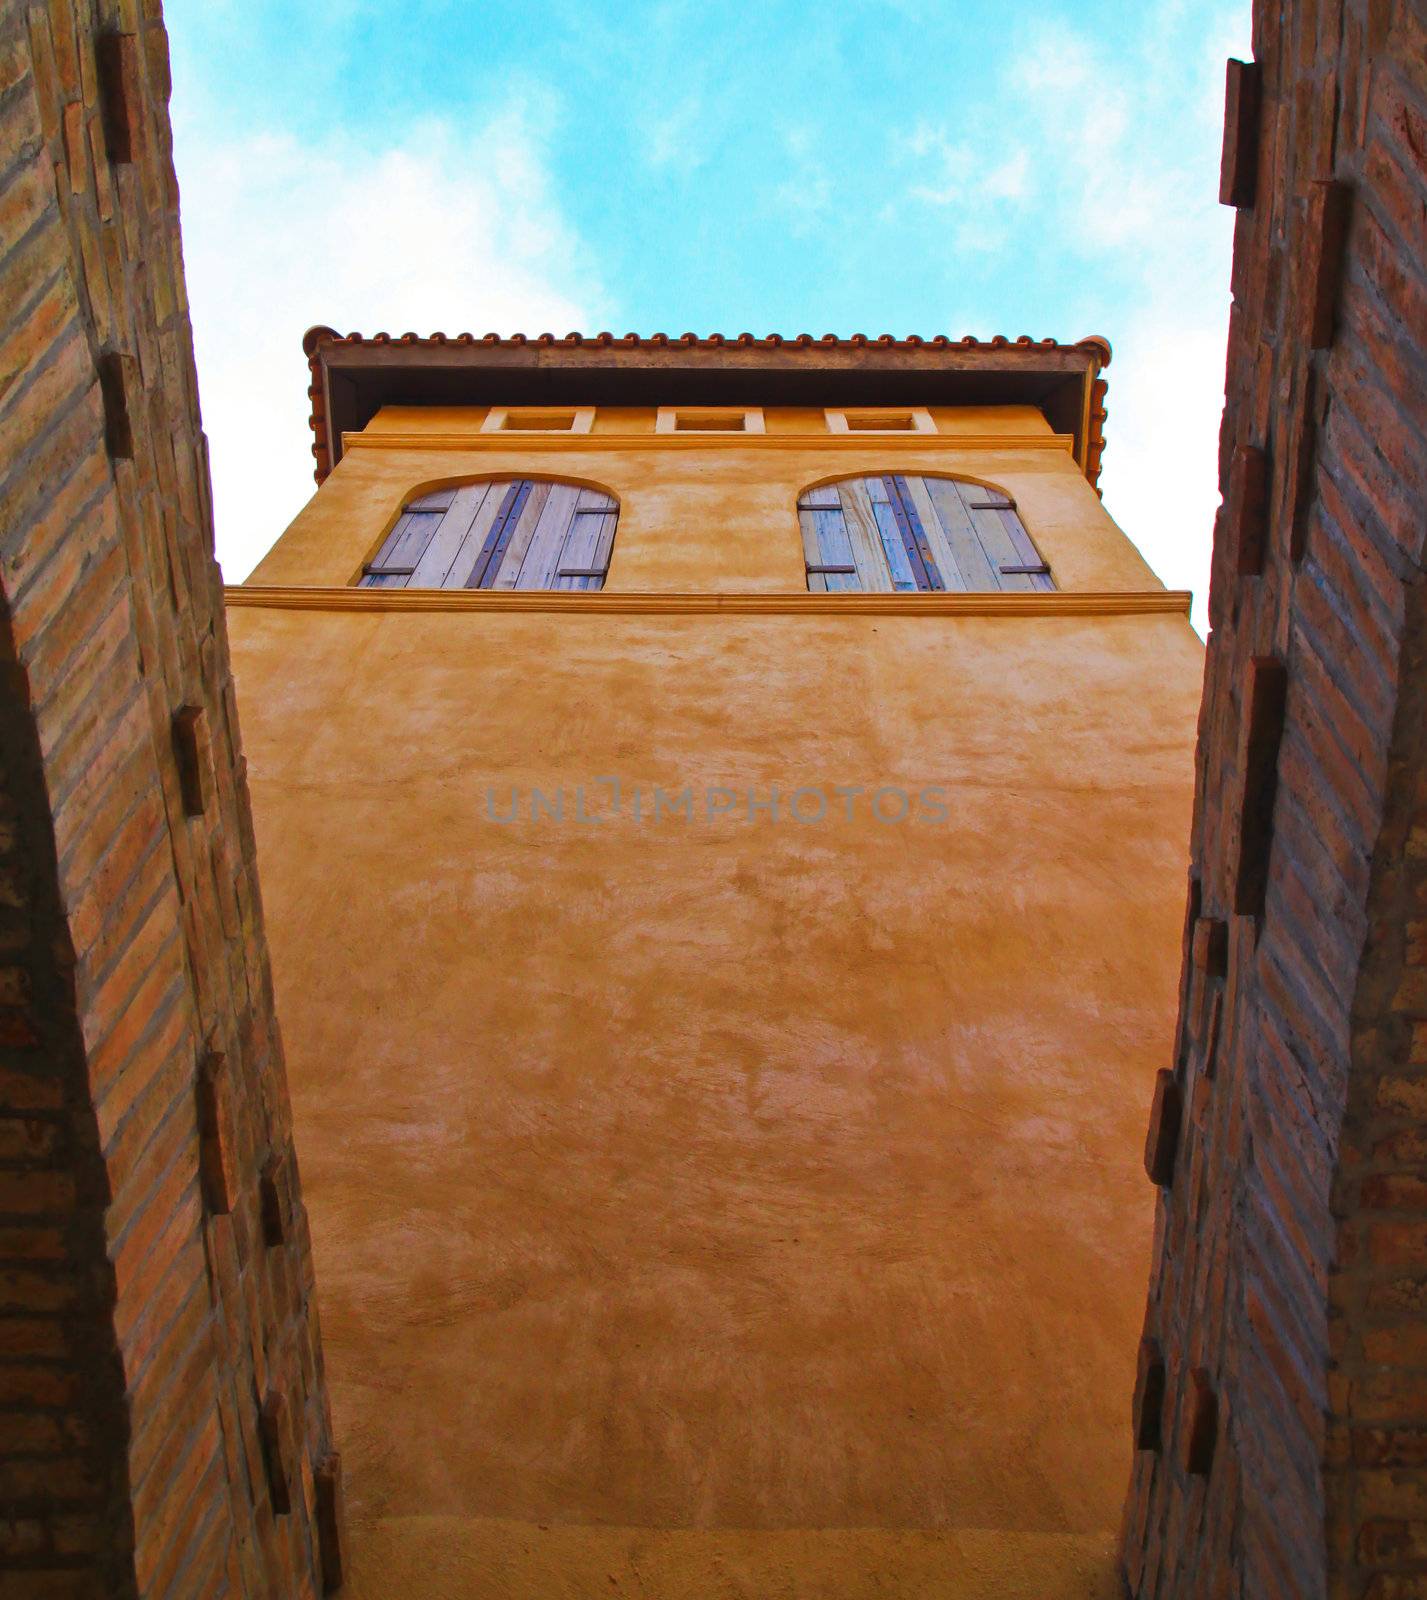 Perspective of italian building